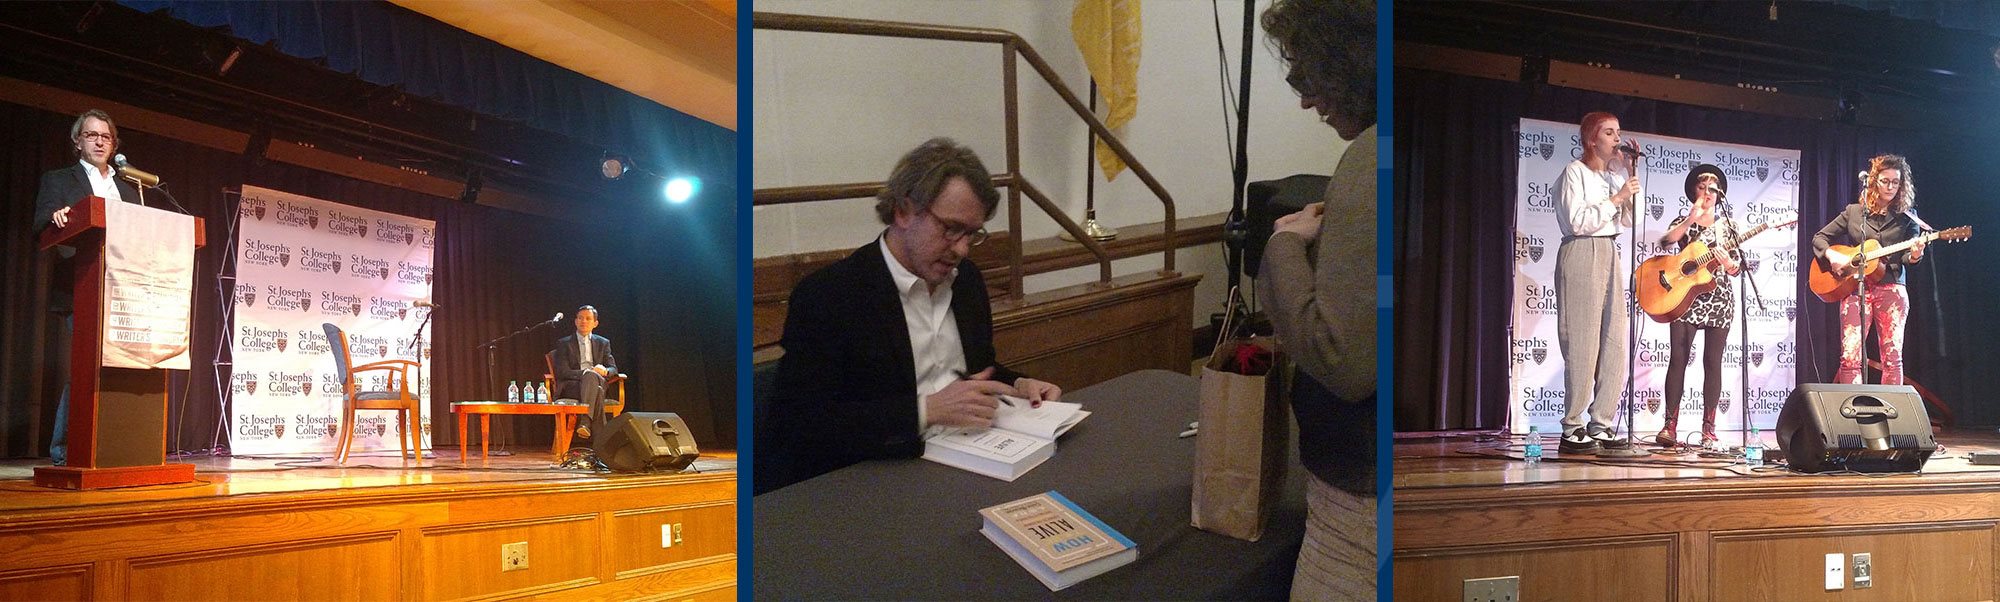 Colin Beavan and Dan Harris; Colin Beavan book signing; The Special Someones